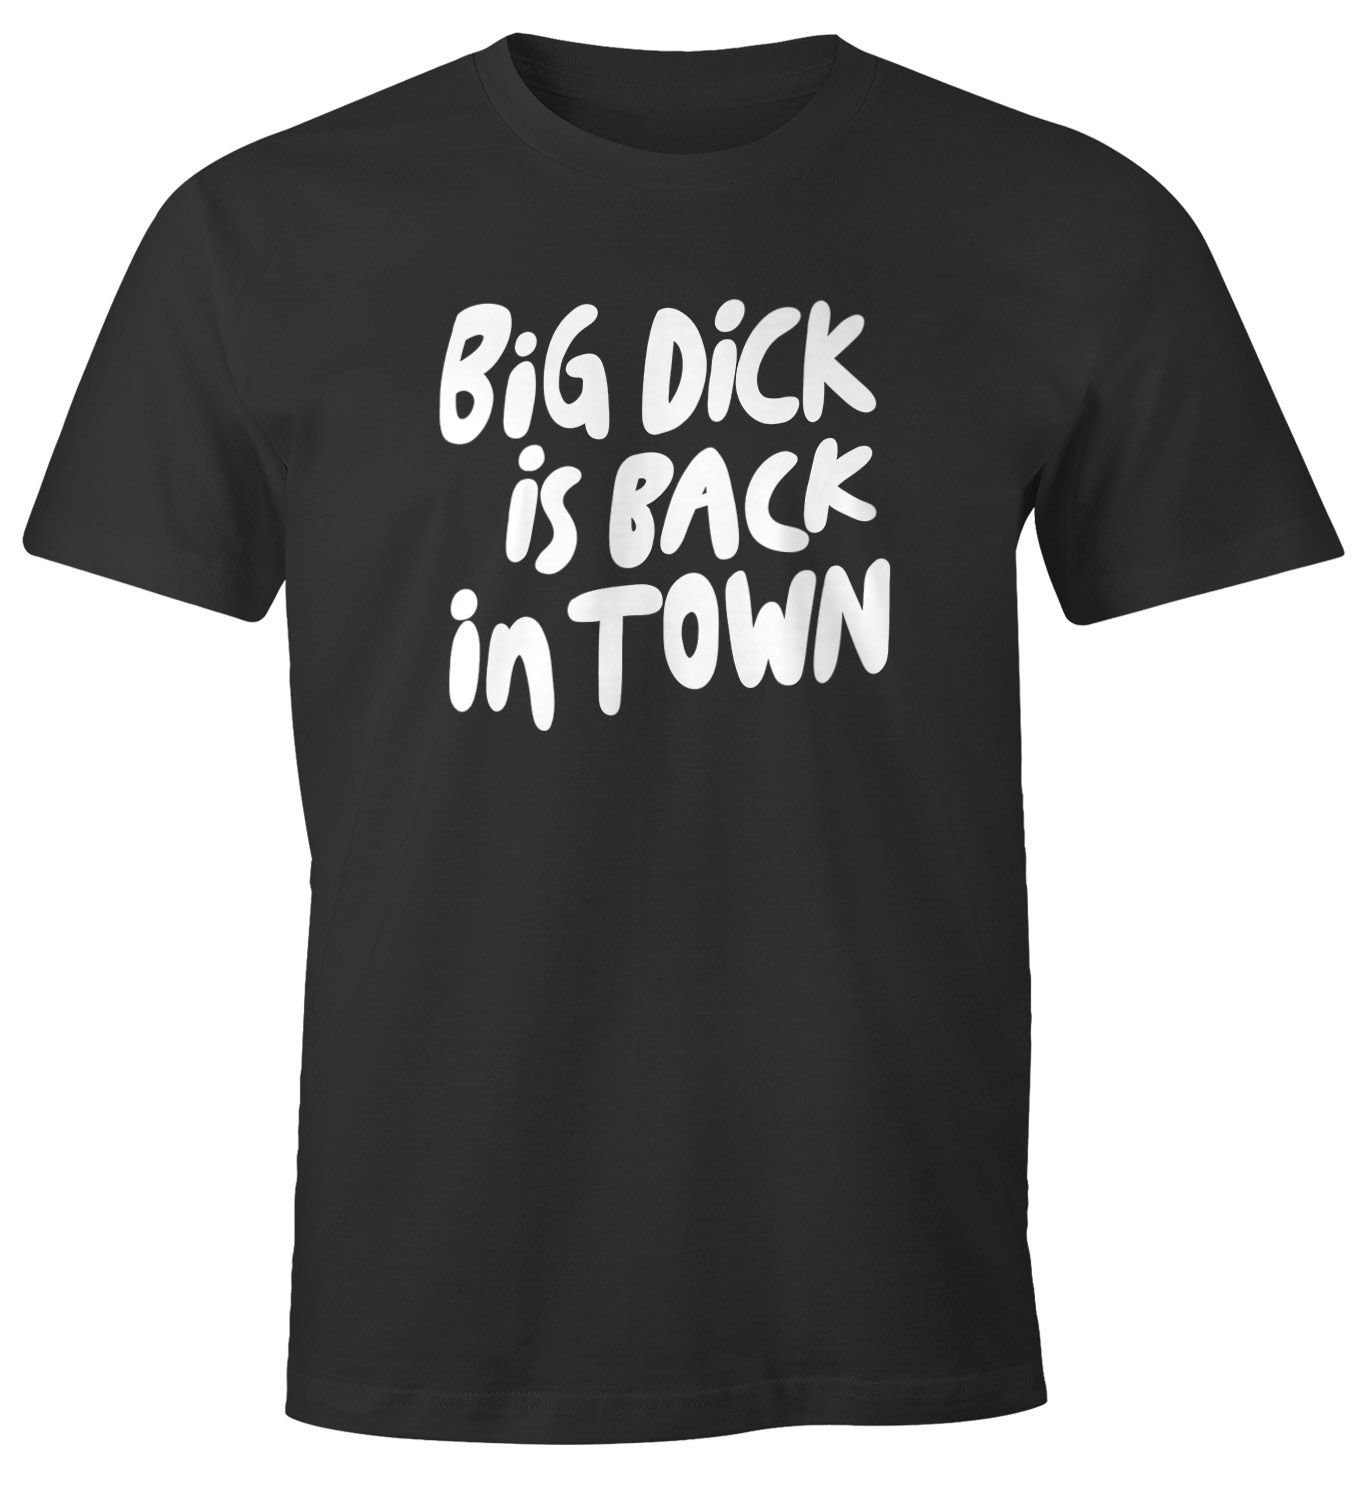 Herren Dick is Print Fun-Shirt Spruch mit lustig Print-Shirt Town Moonworks® Big schwarz MoonWorks T-Shirt in mit Ironie back